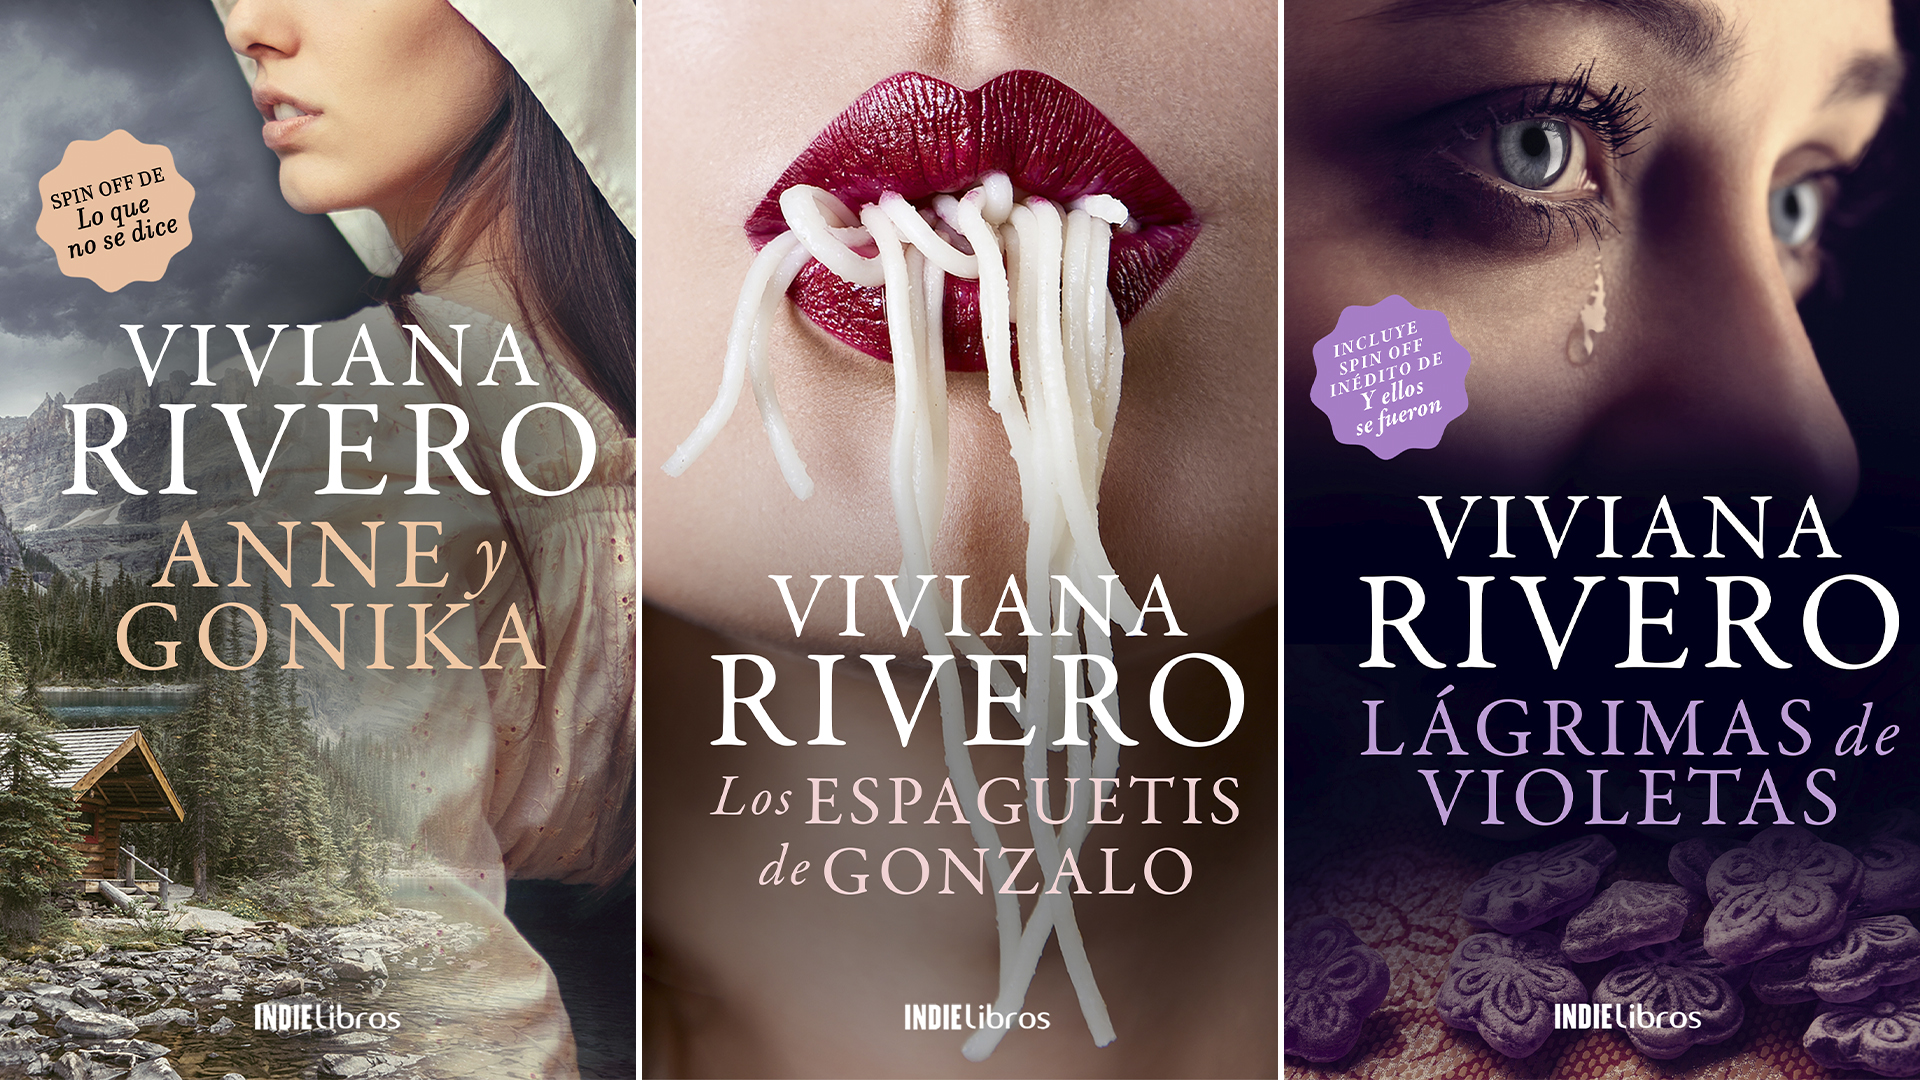 The three exclusive stories by Viviana Rivero at Bajalibros.com